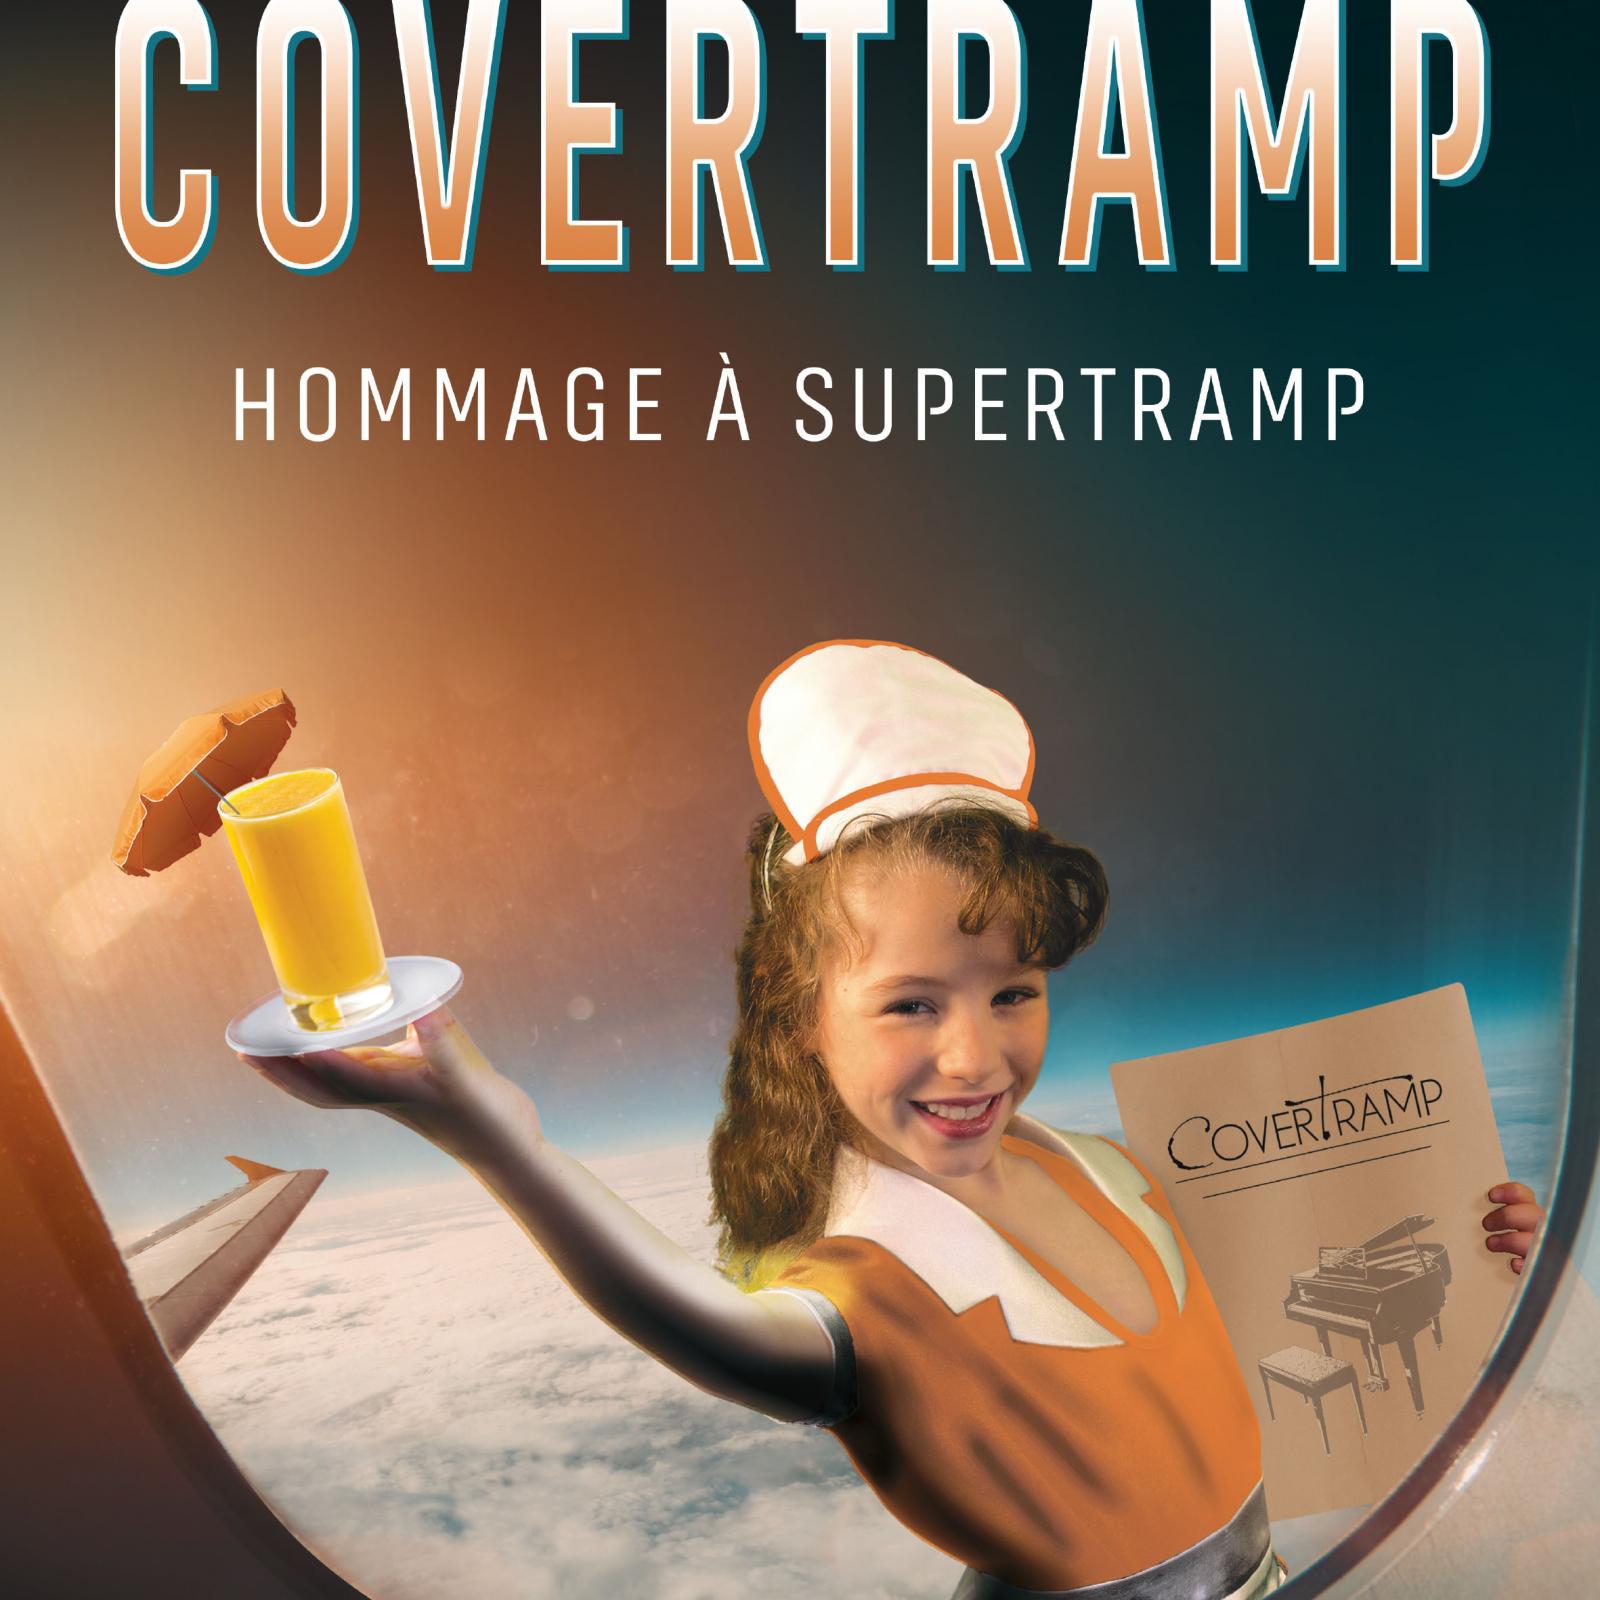 covertramp2_0 ©Covertramp